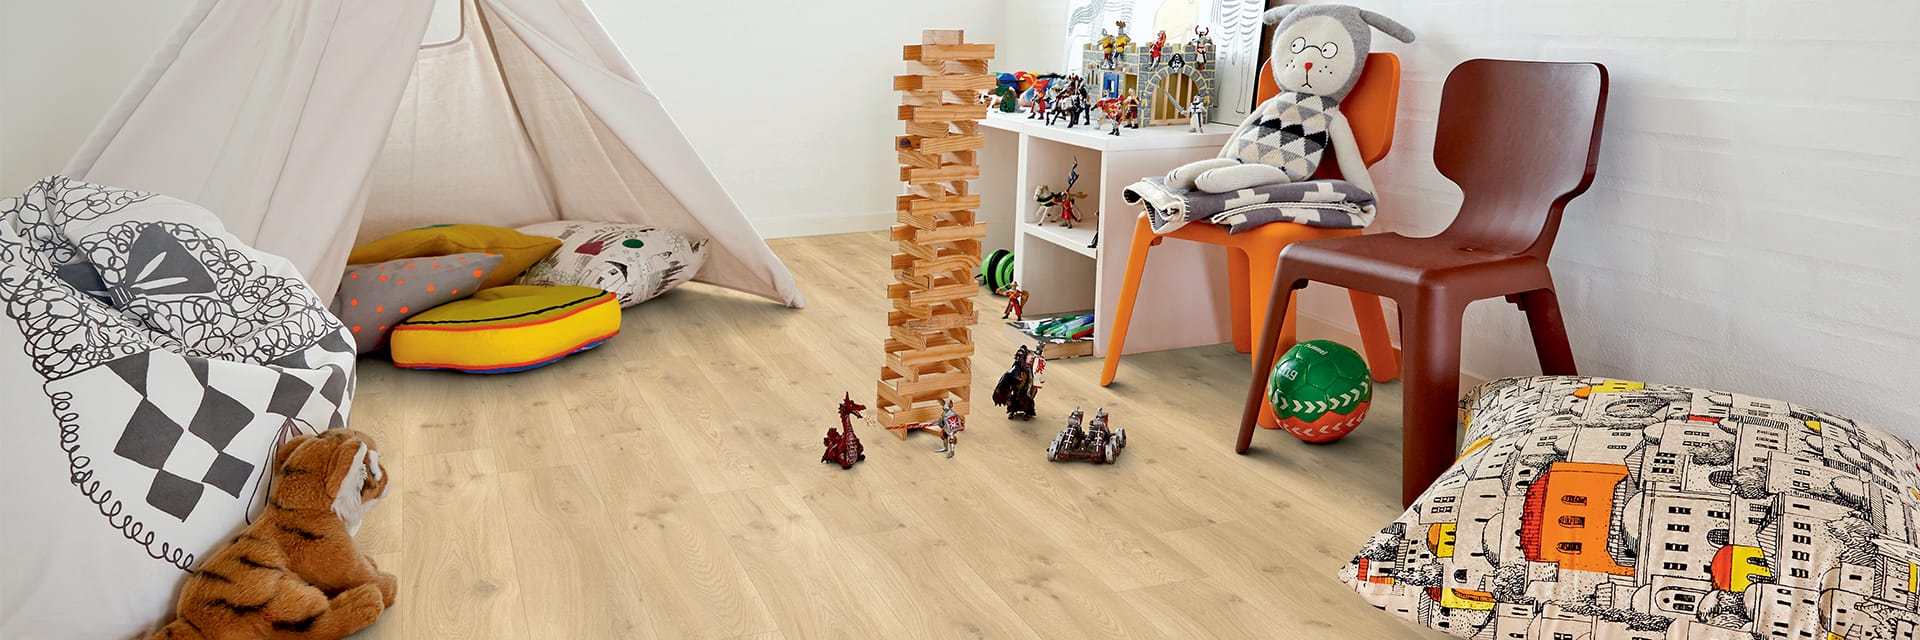 детская комната с игрушками, лежащими на бежевом 